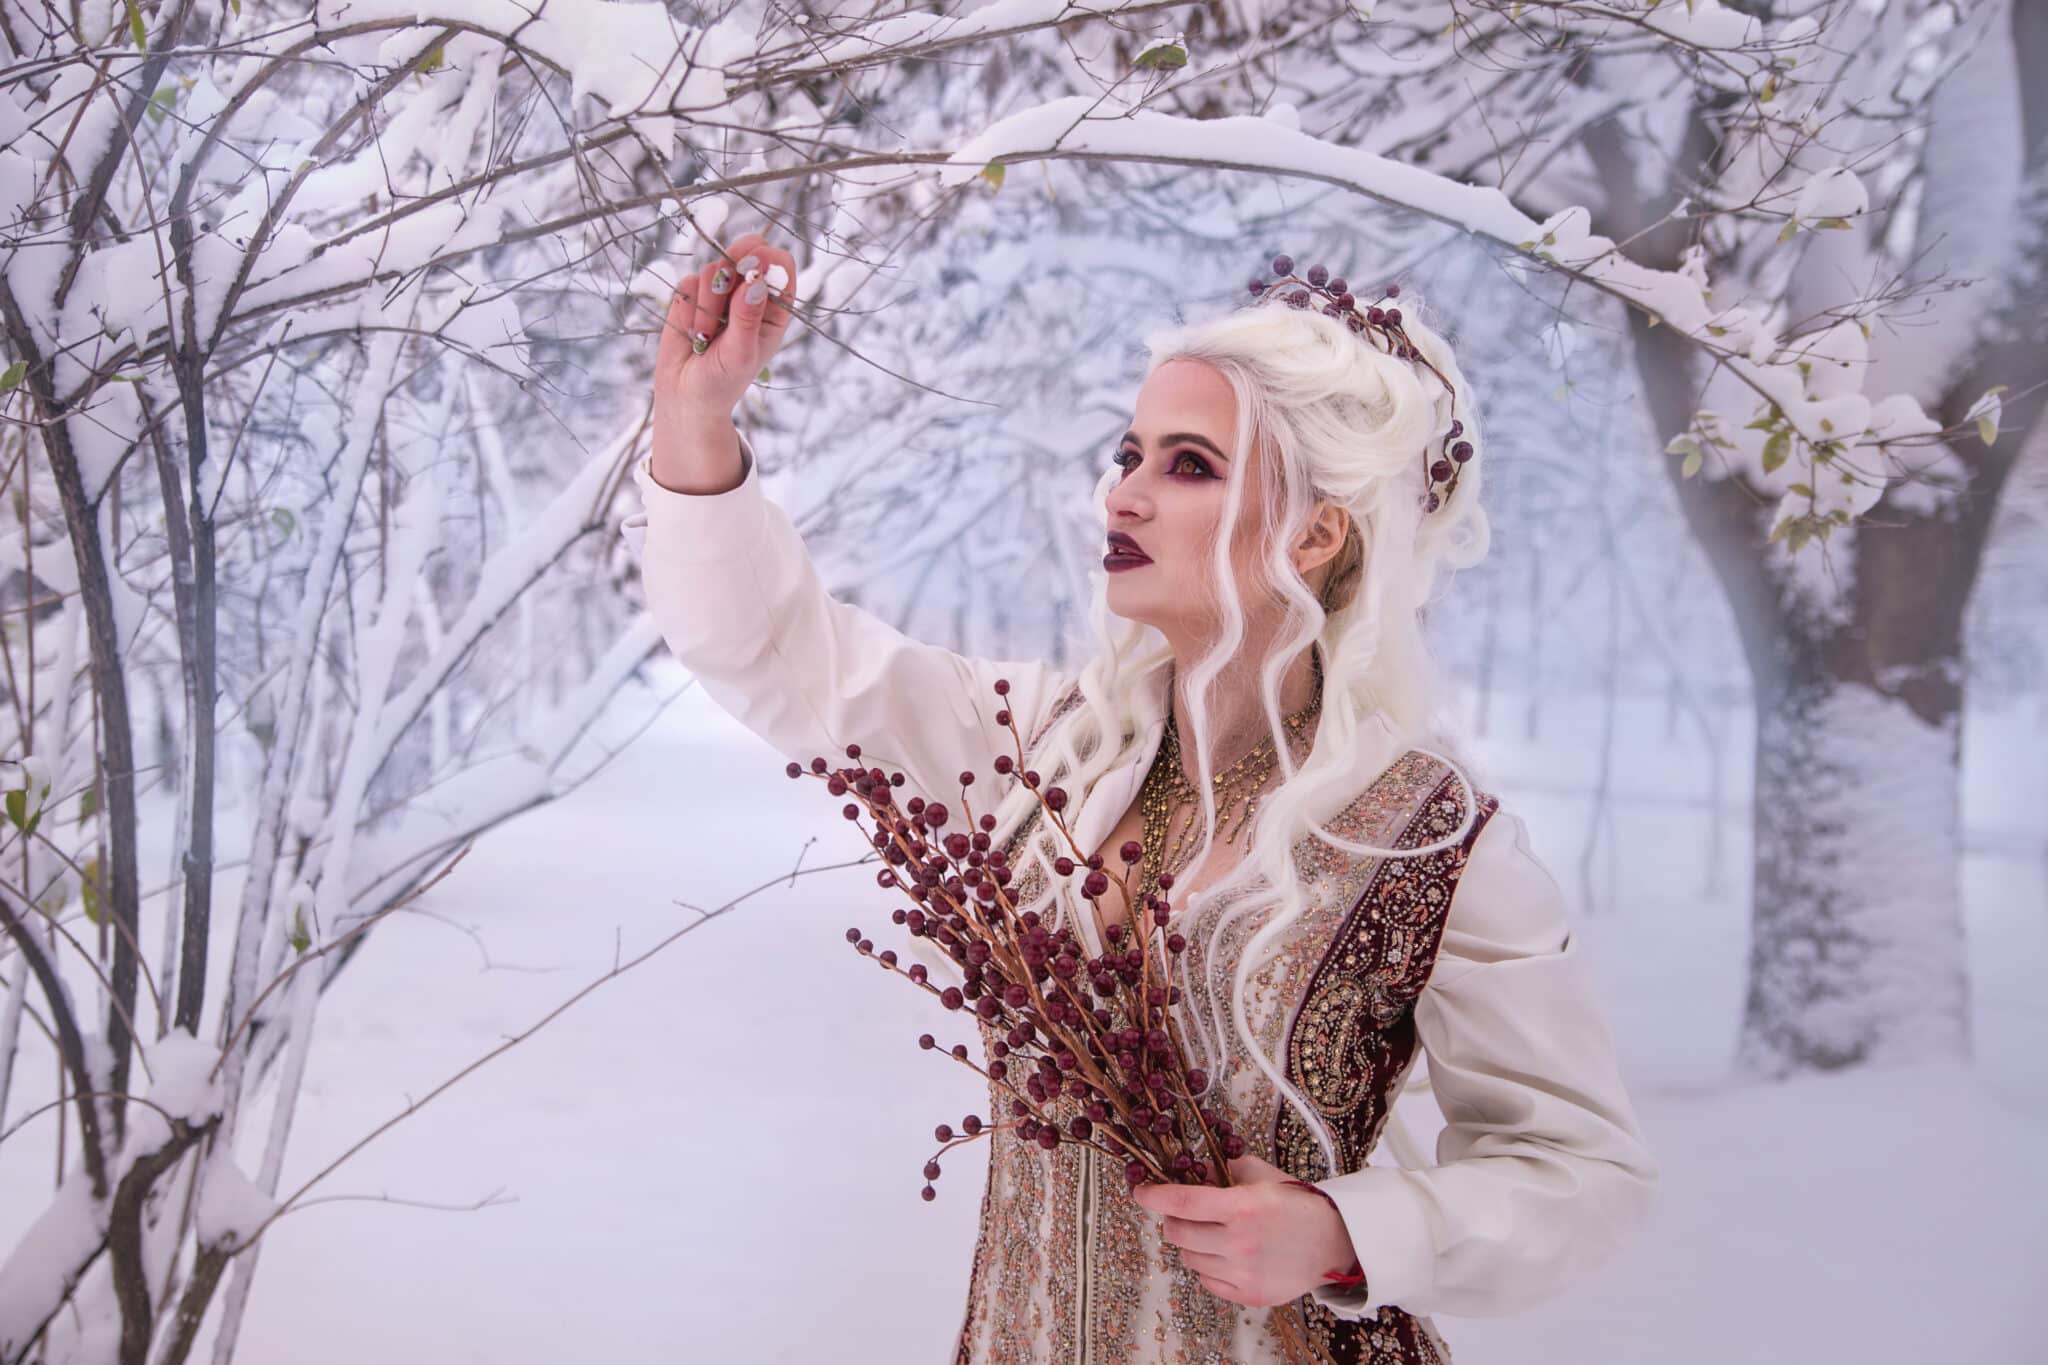 A beautiful girl in a princess costume walks through the winter